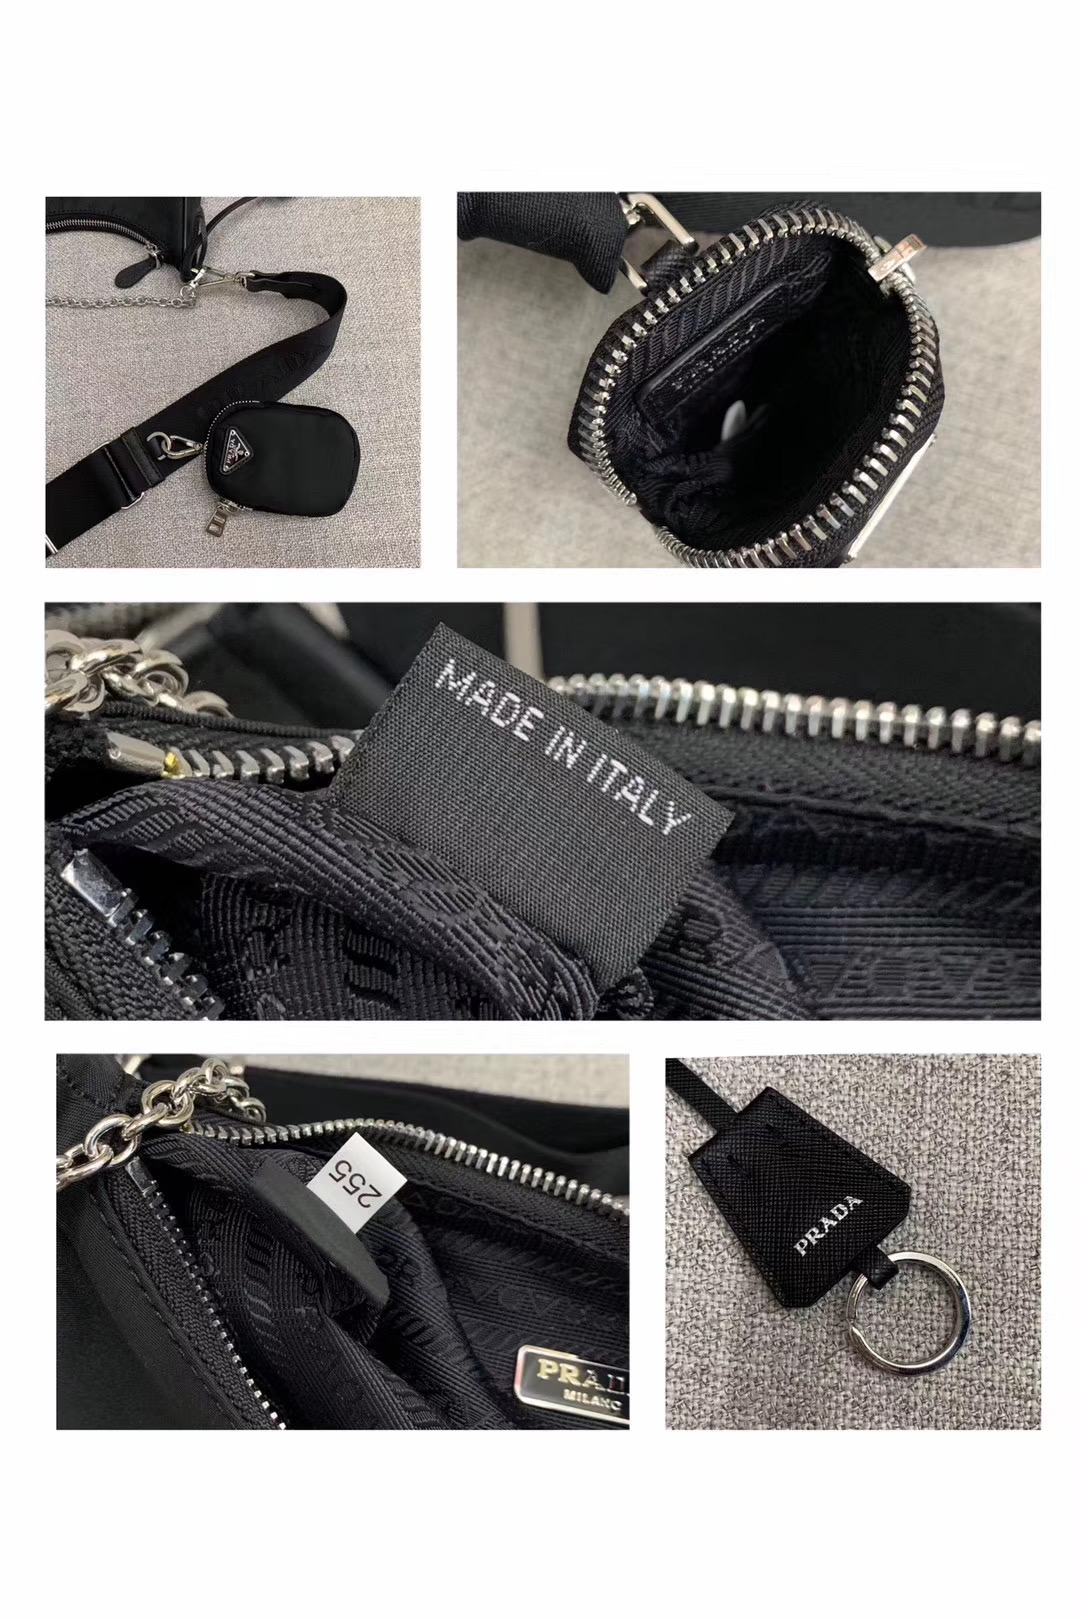 Prada Nylon Shoulder Bag 91277 black